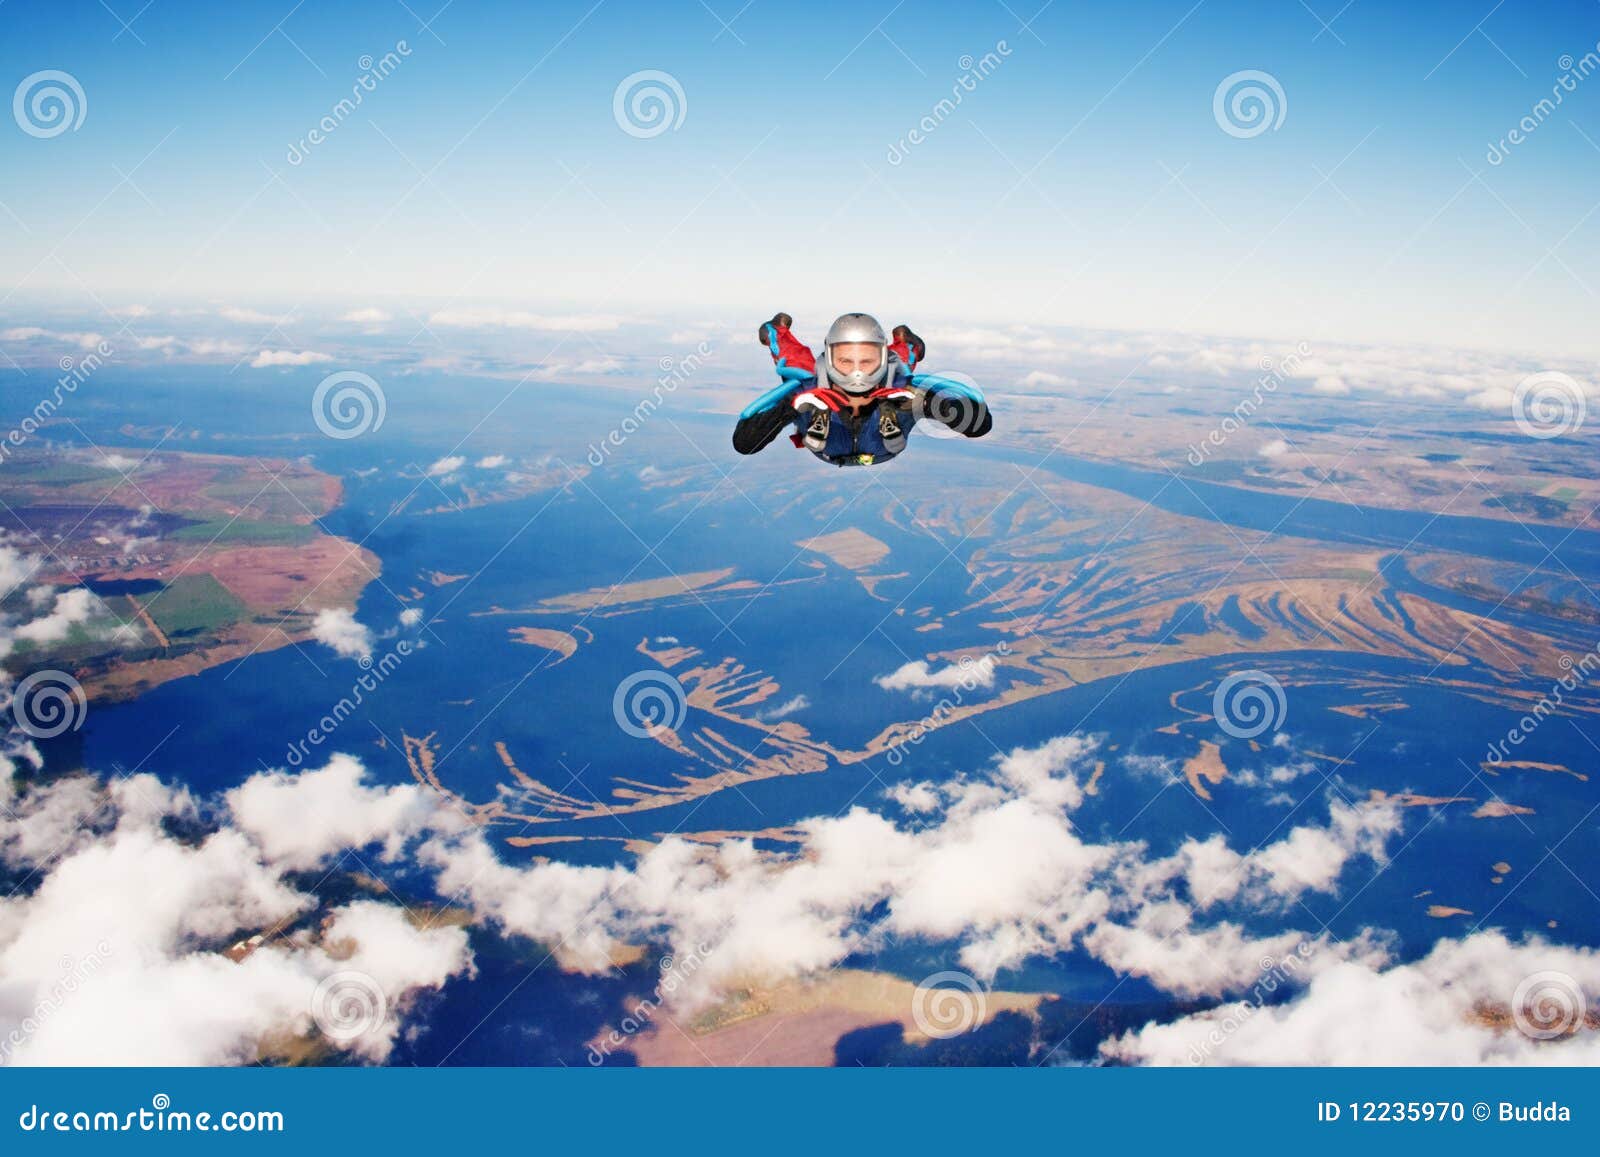 skydiver